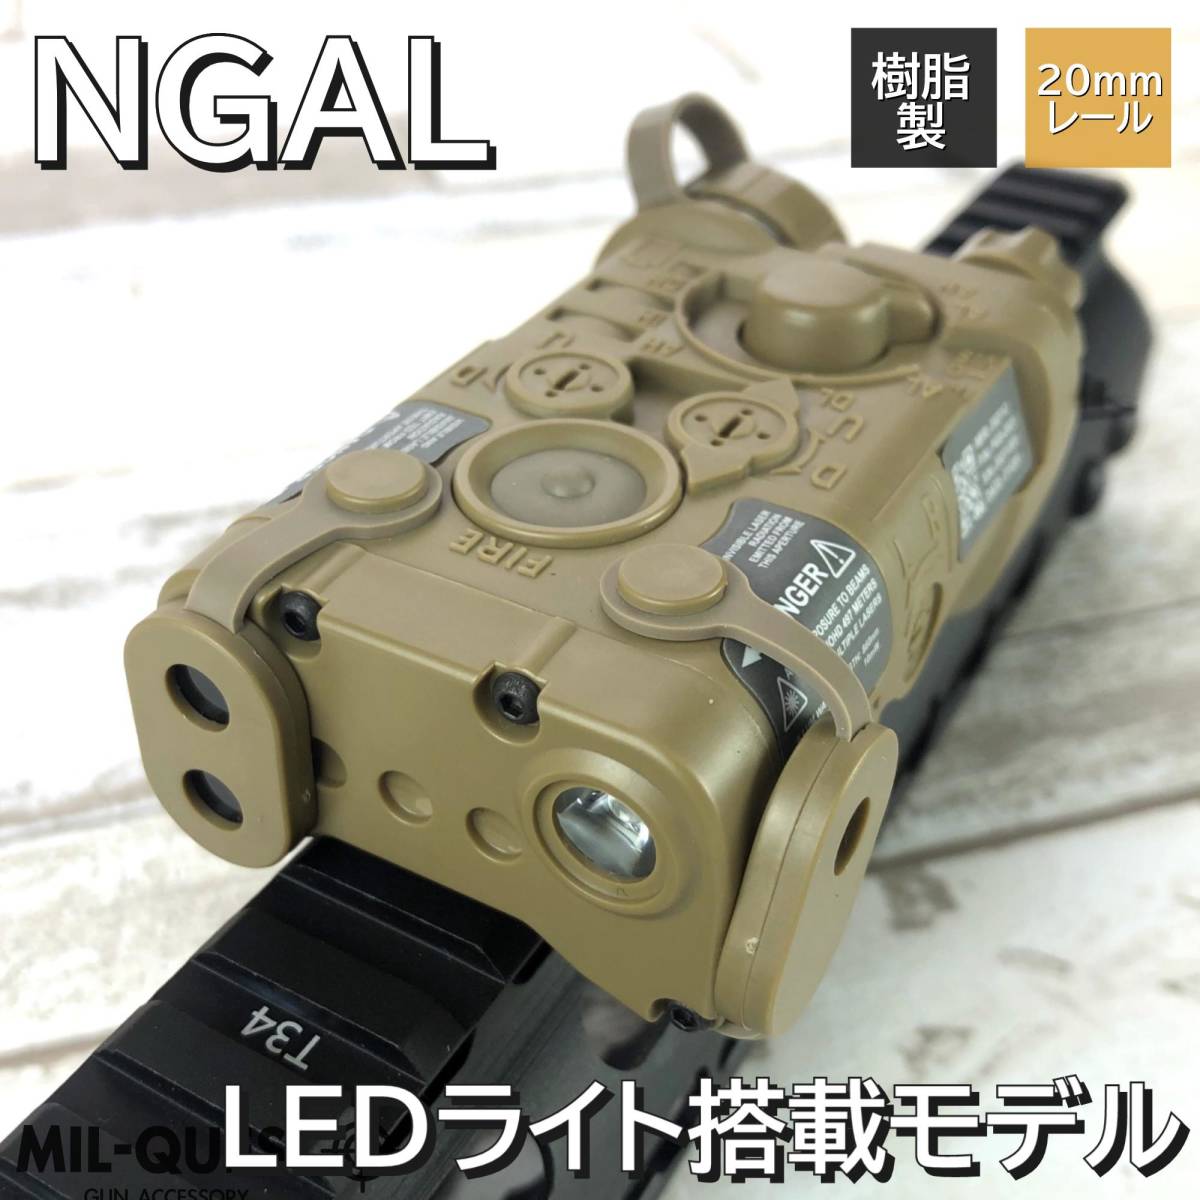 NGALタイプ 樹脂製 LEDライト搭載モデル WADSN ブラック